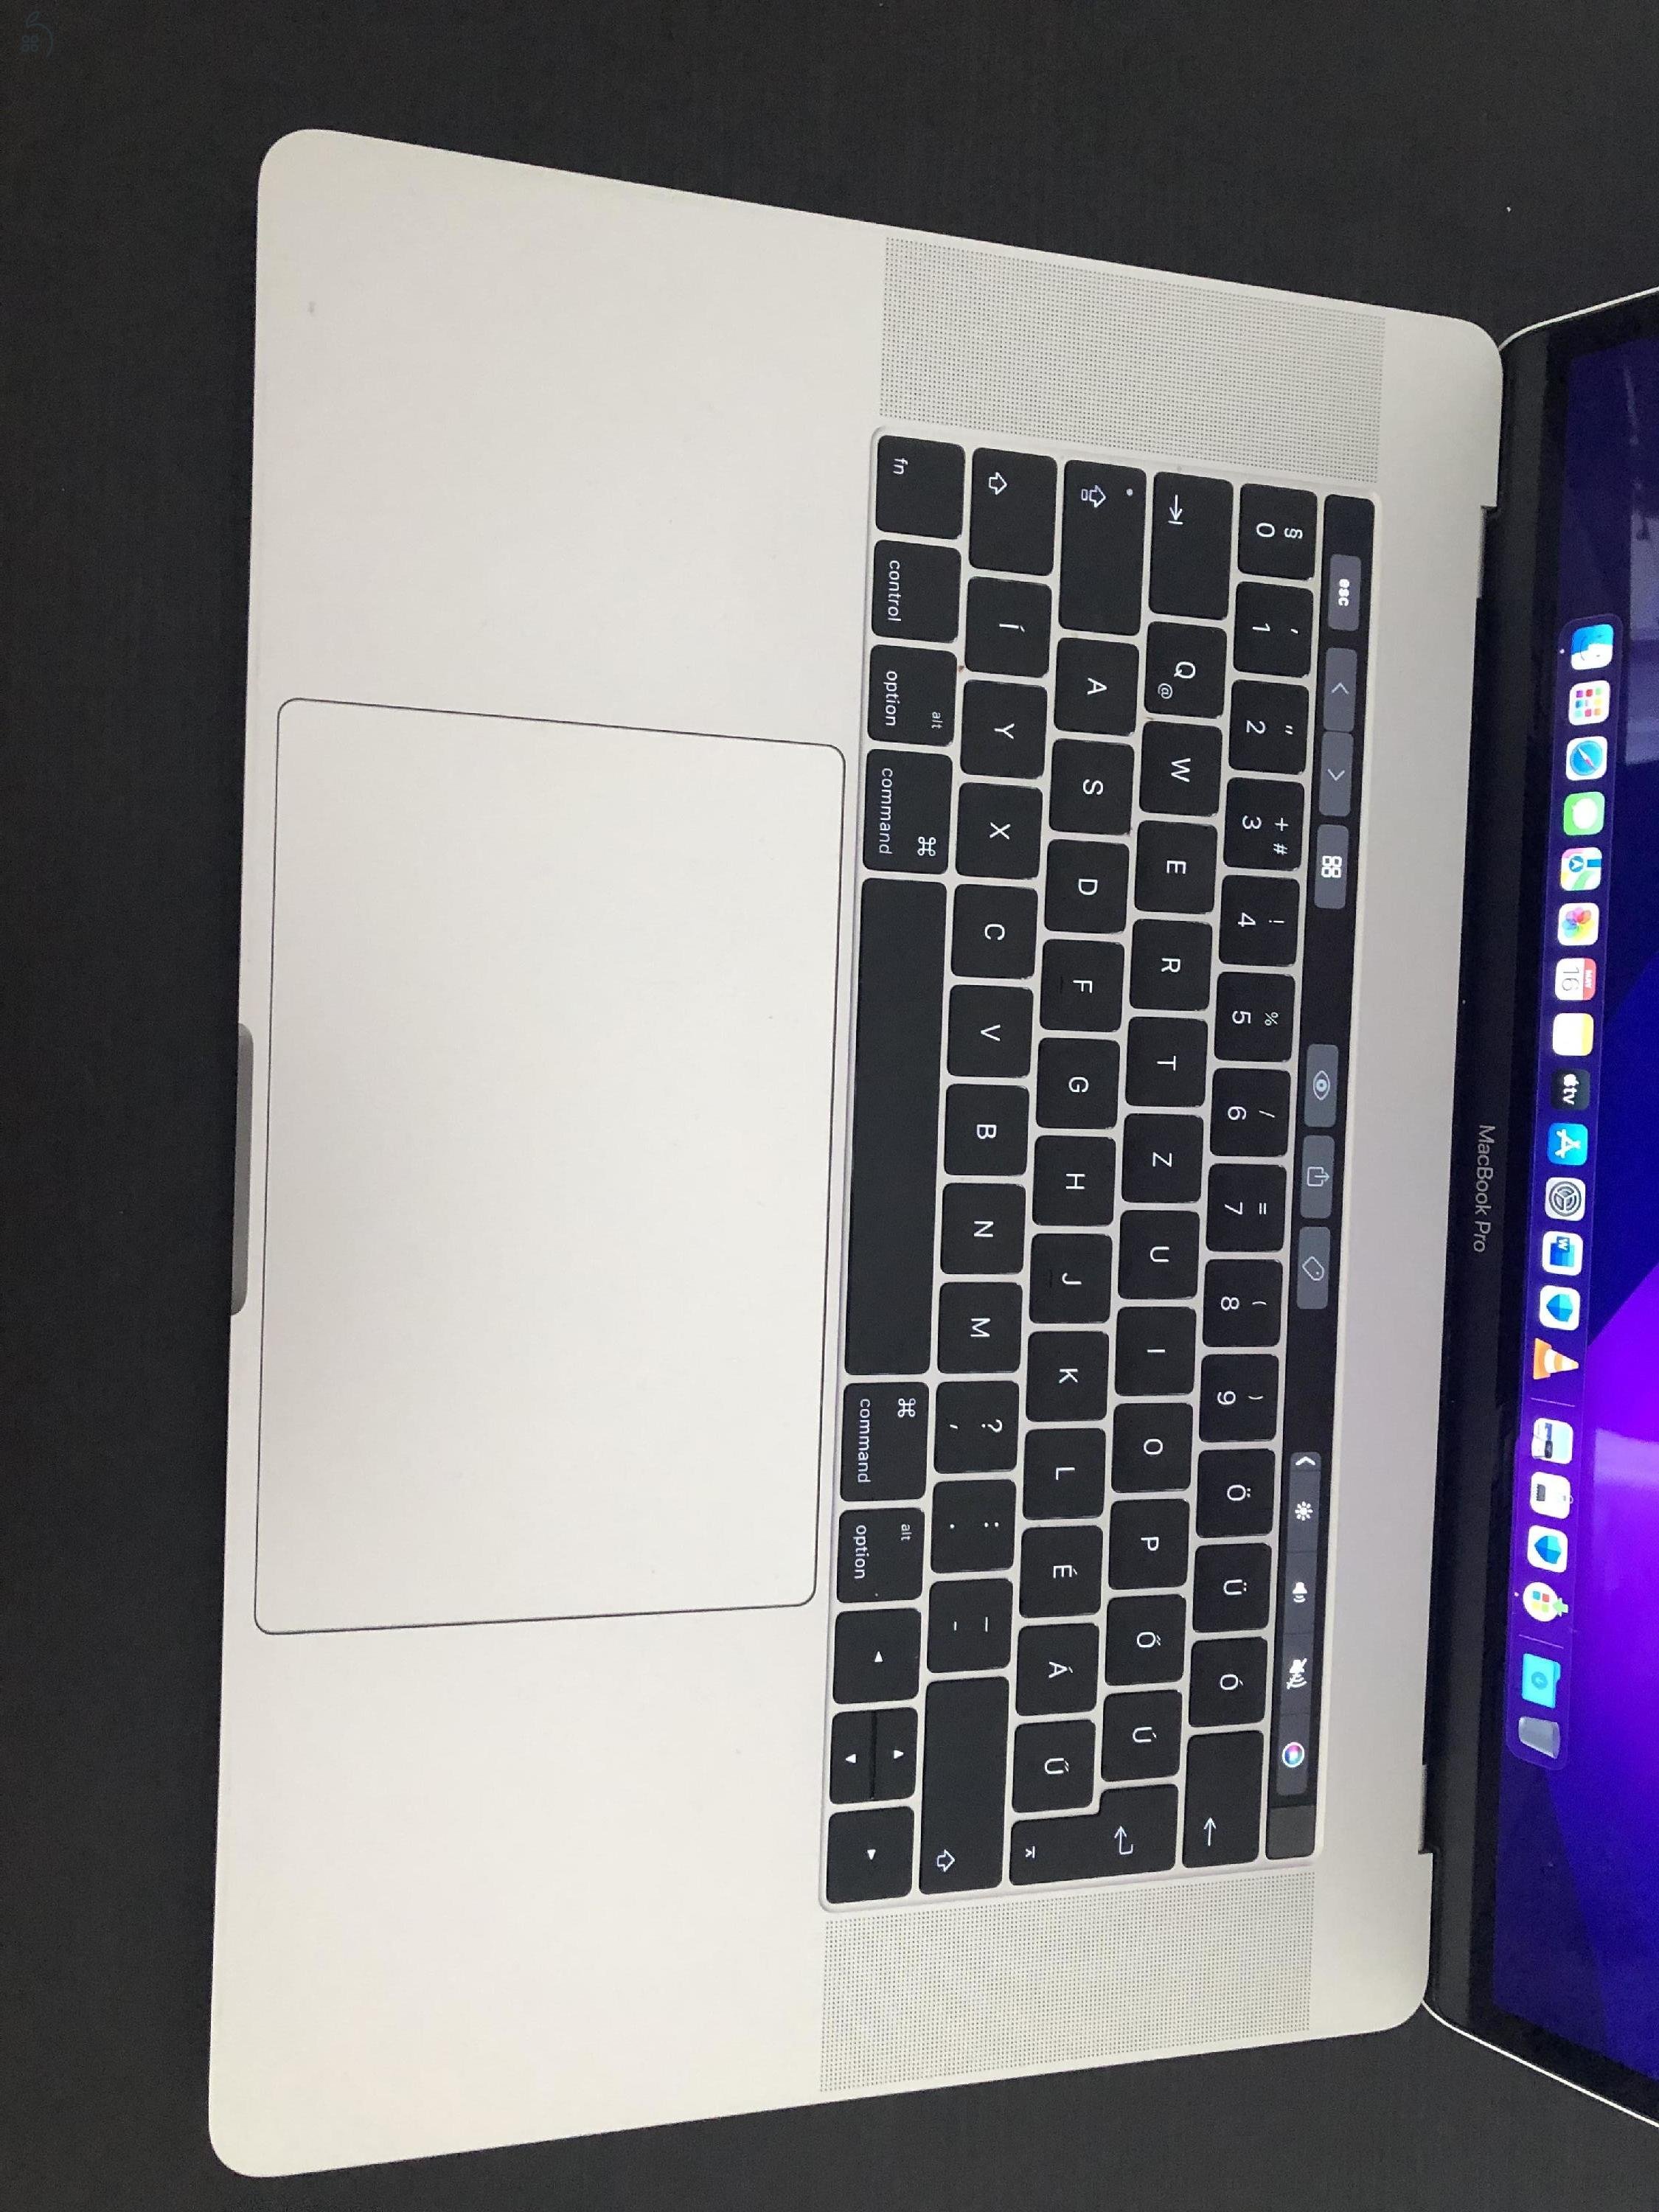 MacBook Pro 2016 Retina 15